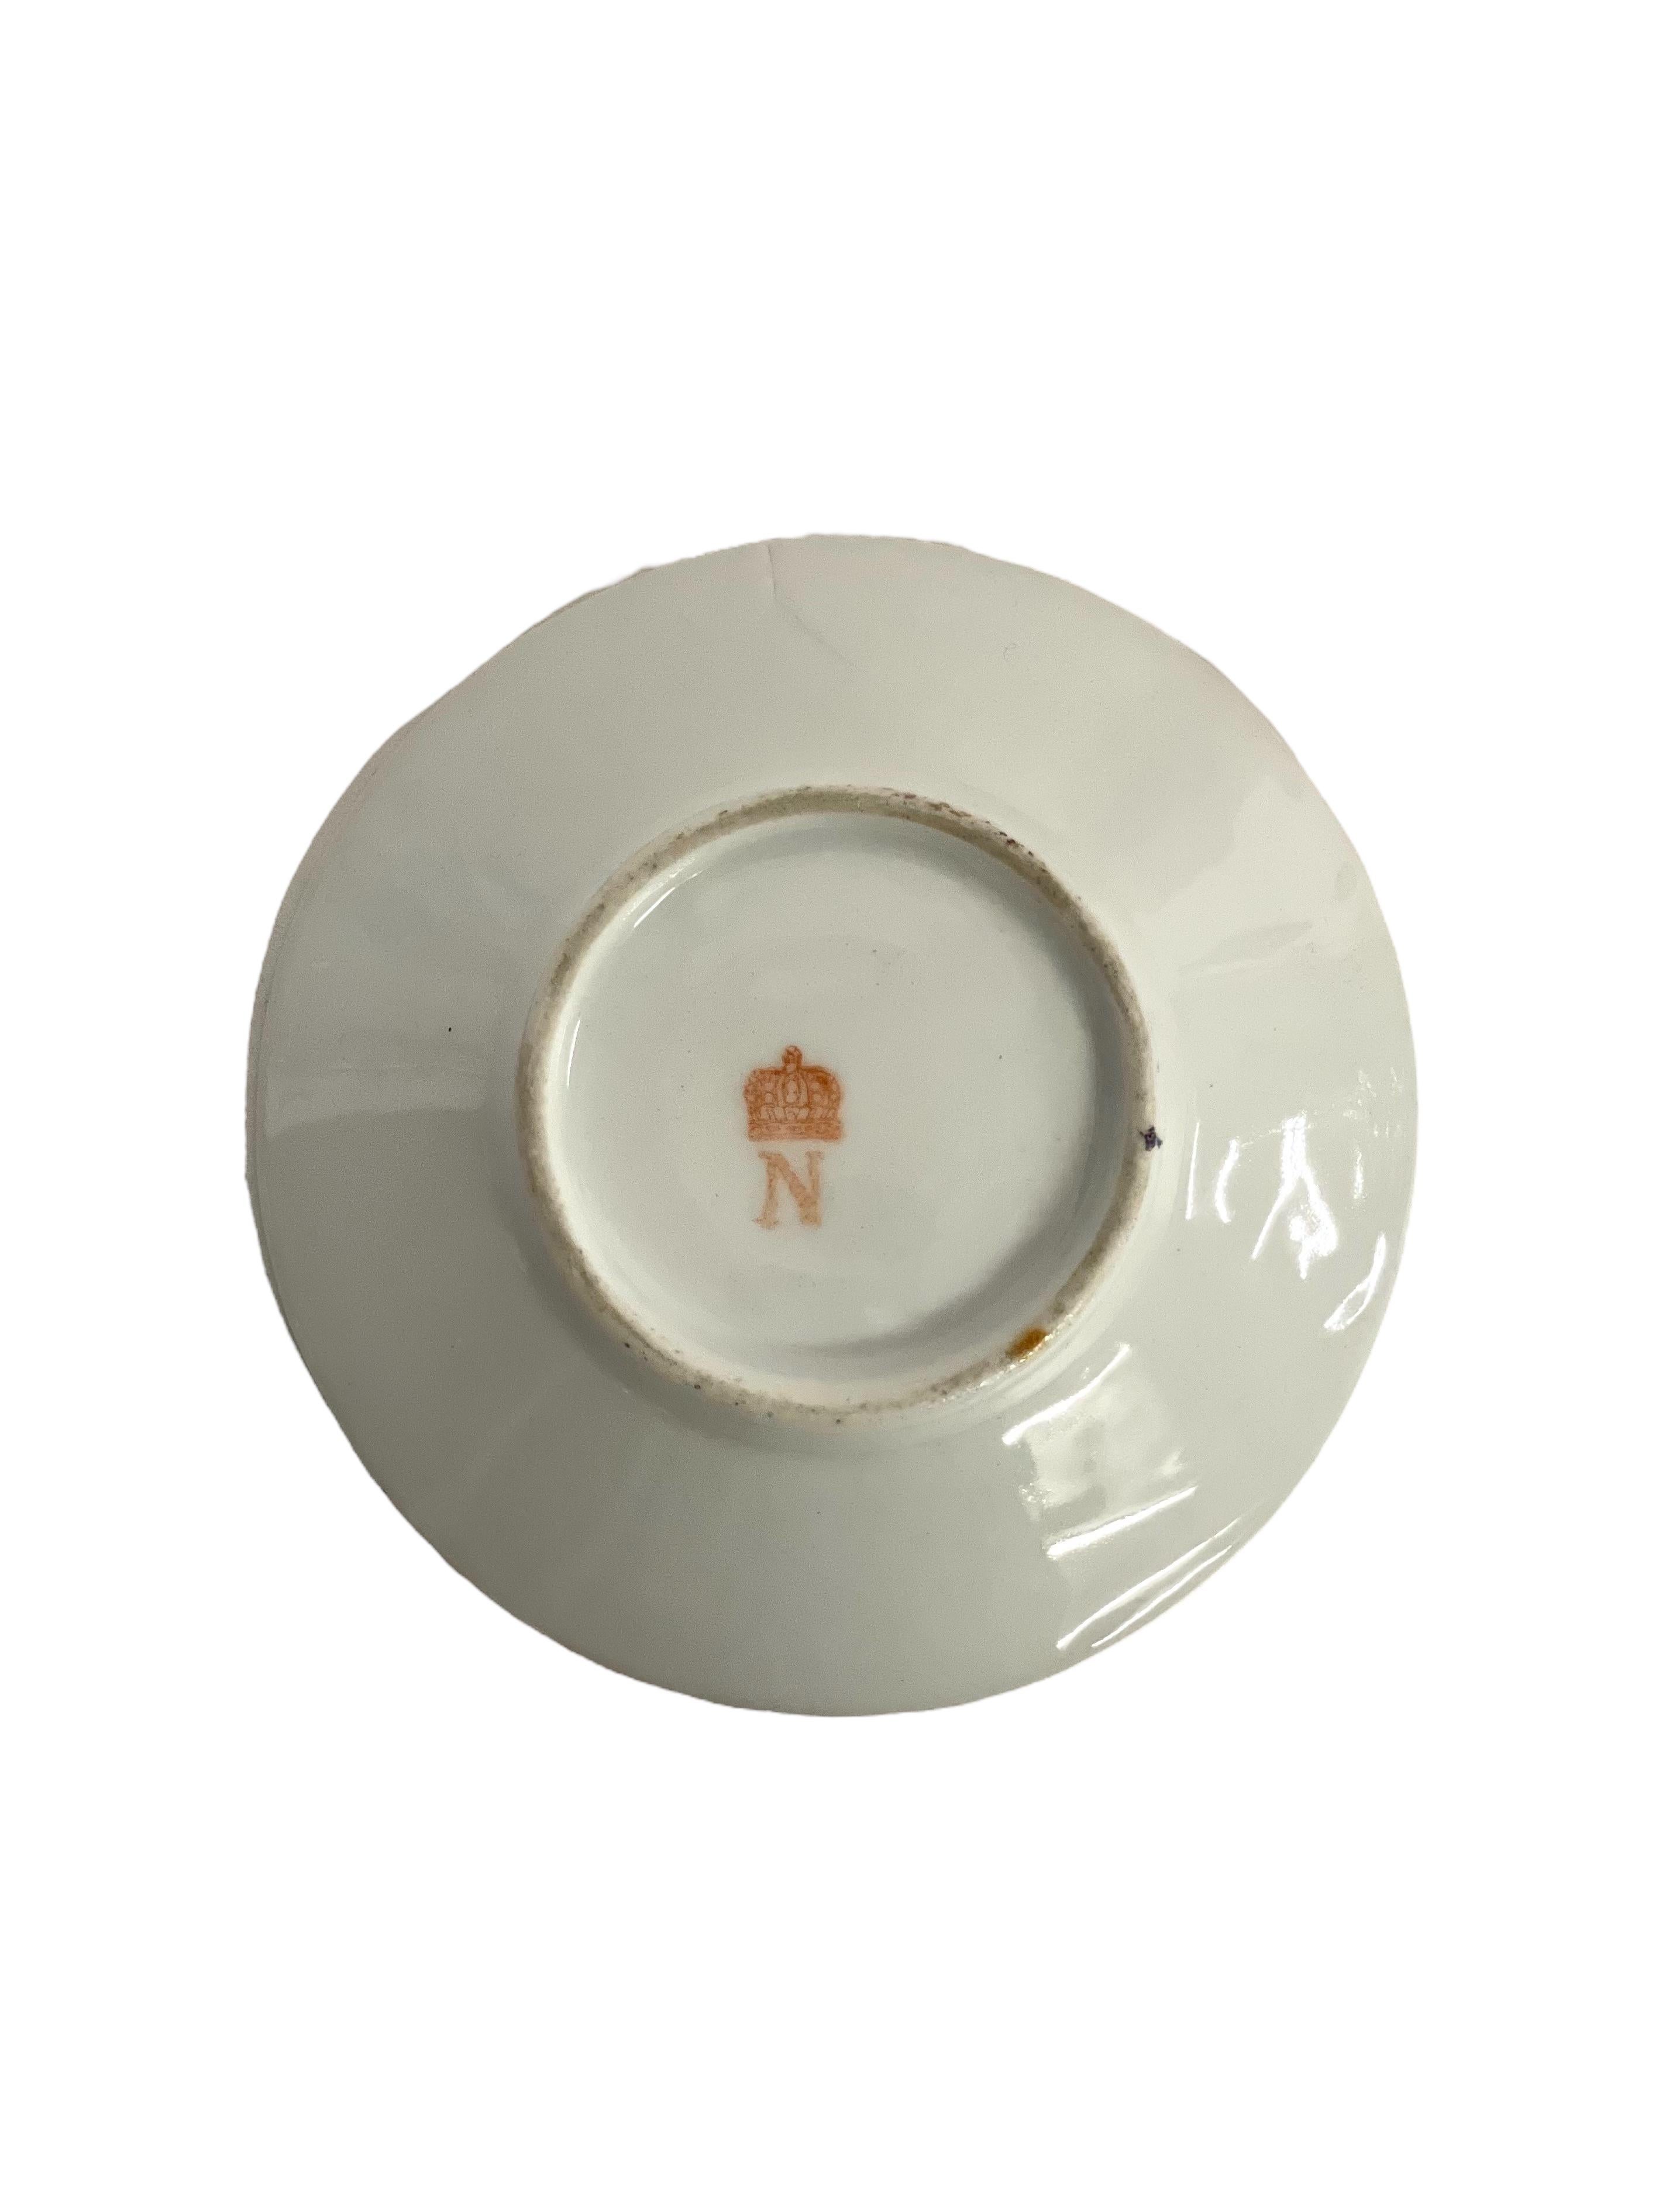 Paris Porcelain Teacup and Saucer Depicting Empress Josephine For Sale 4